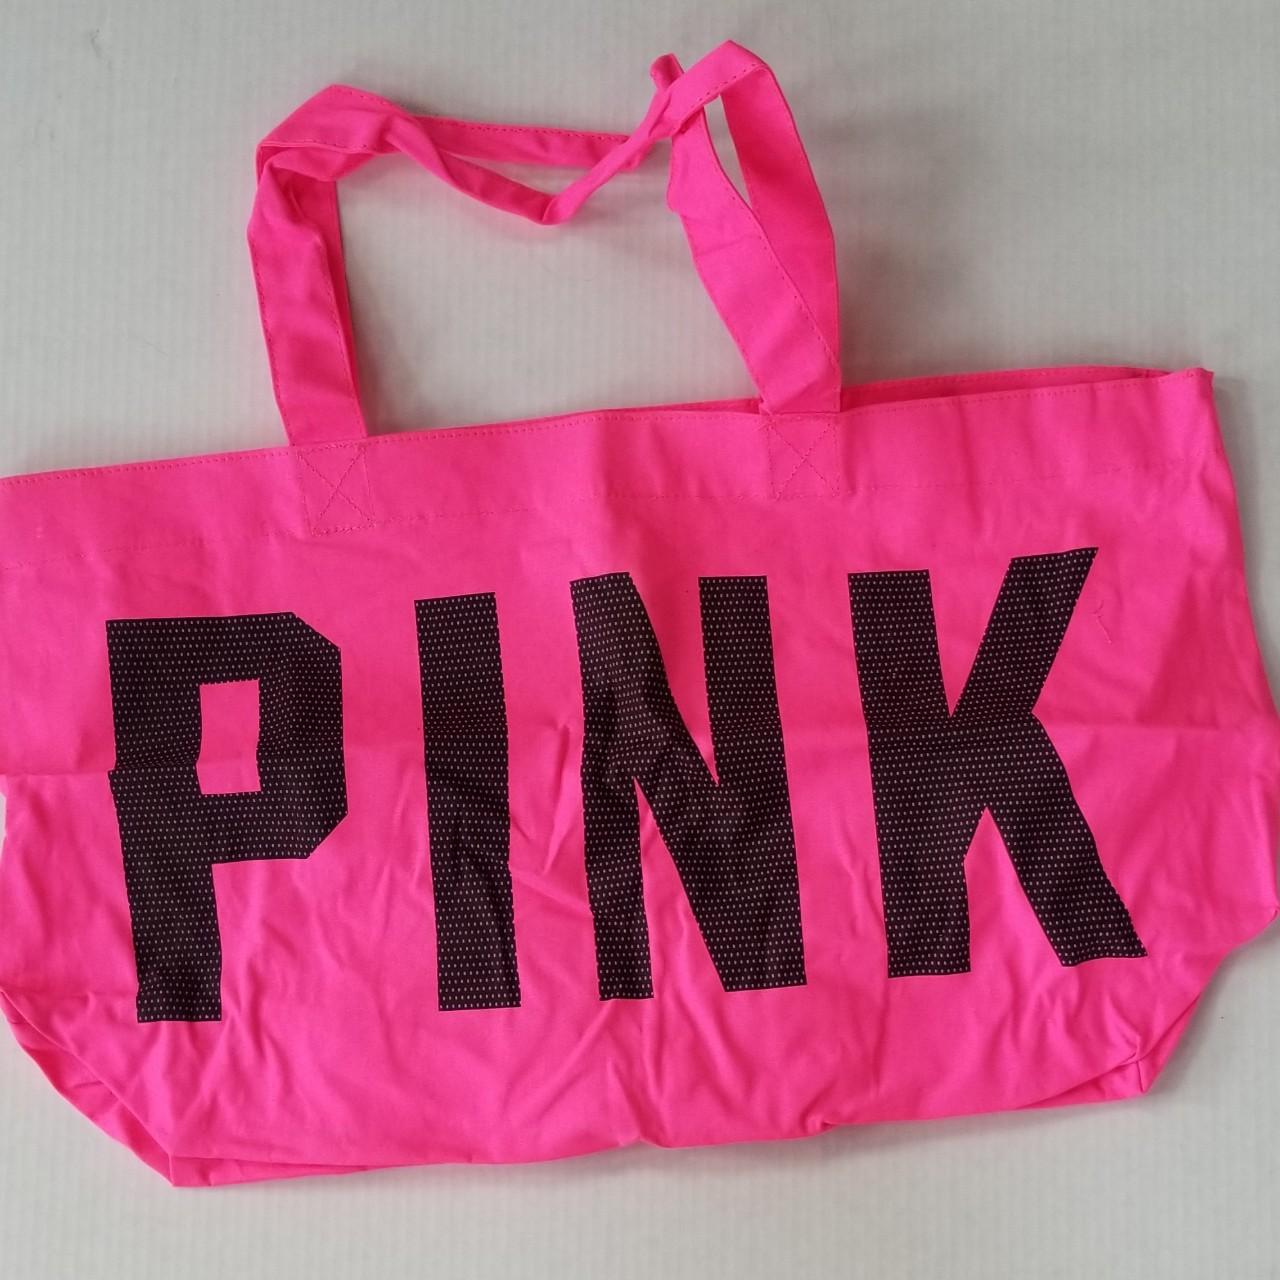 Victoria Secret Pink Tote Bag , Pink and black, New